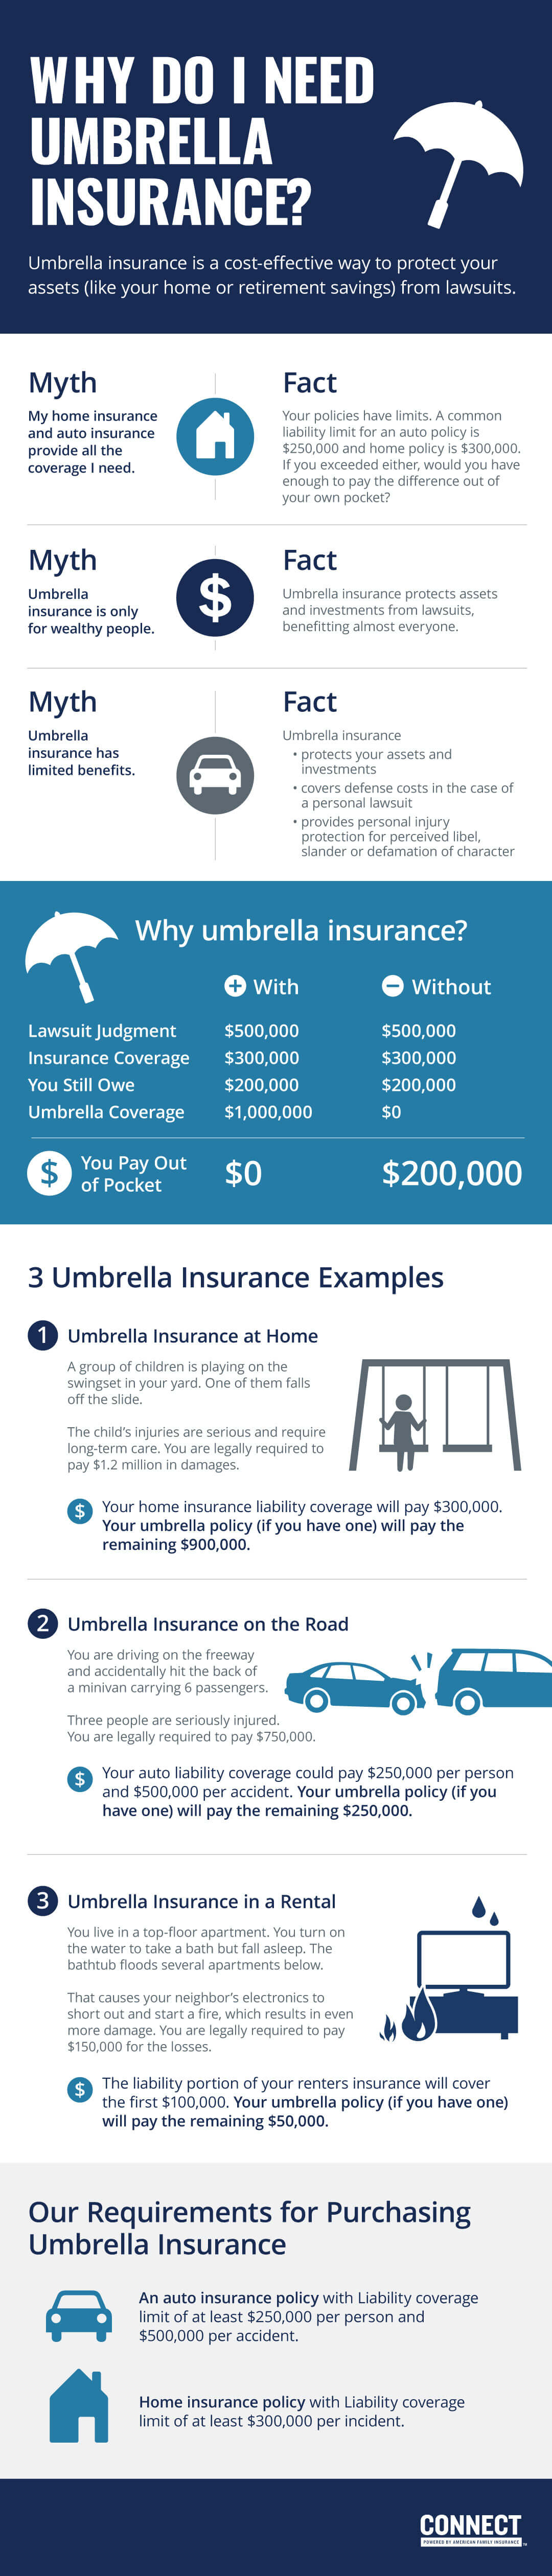 professional liability insurance insurer business insurance company small business insurance insurance